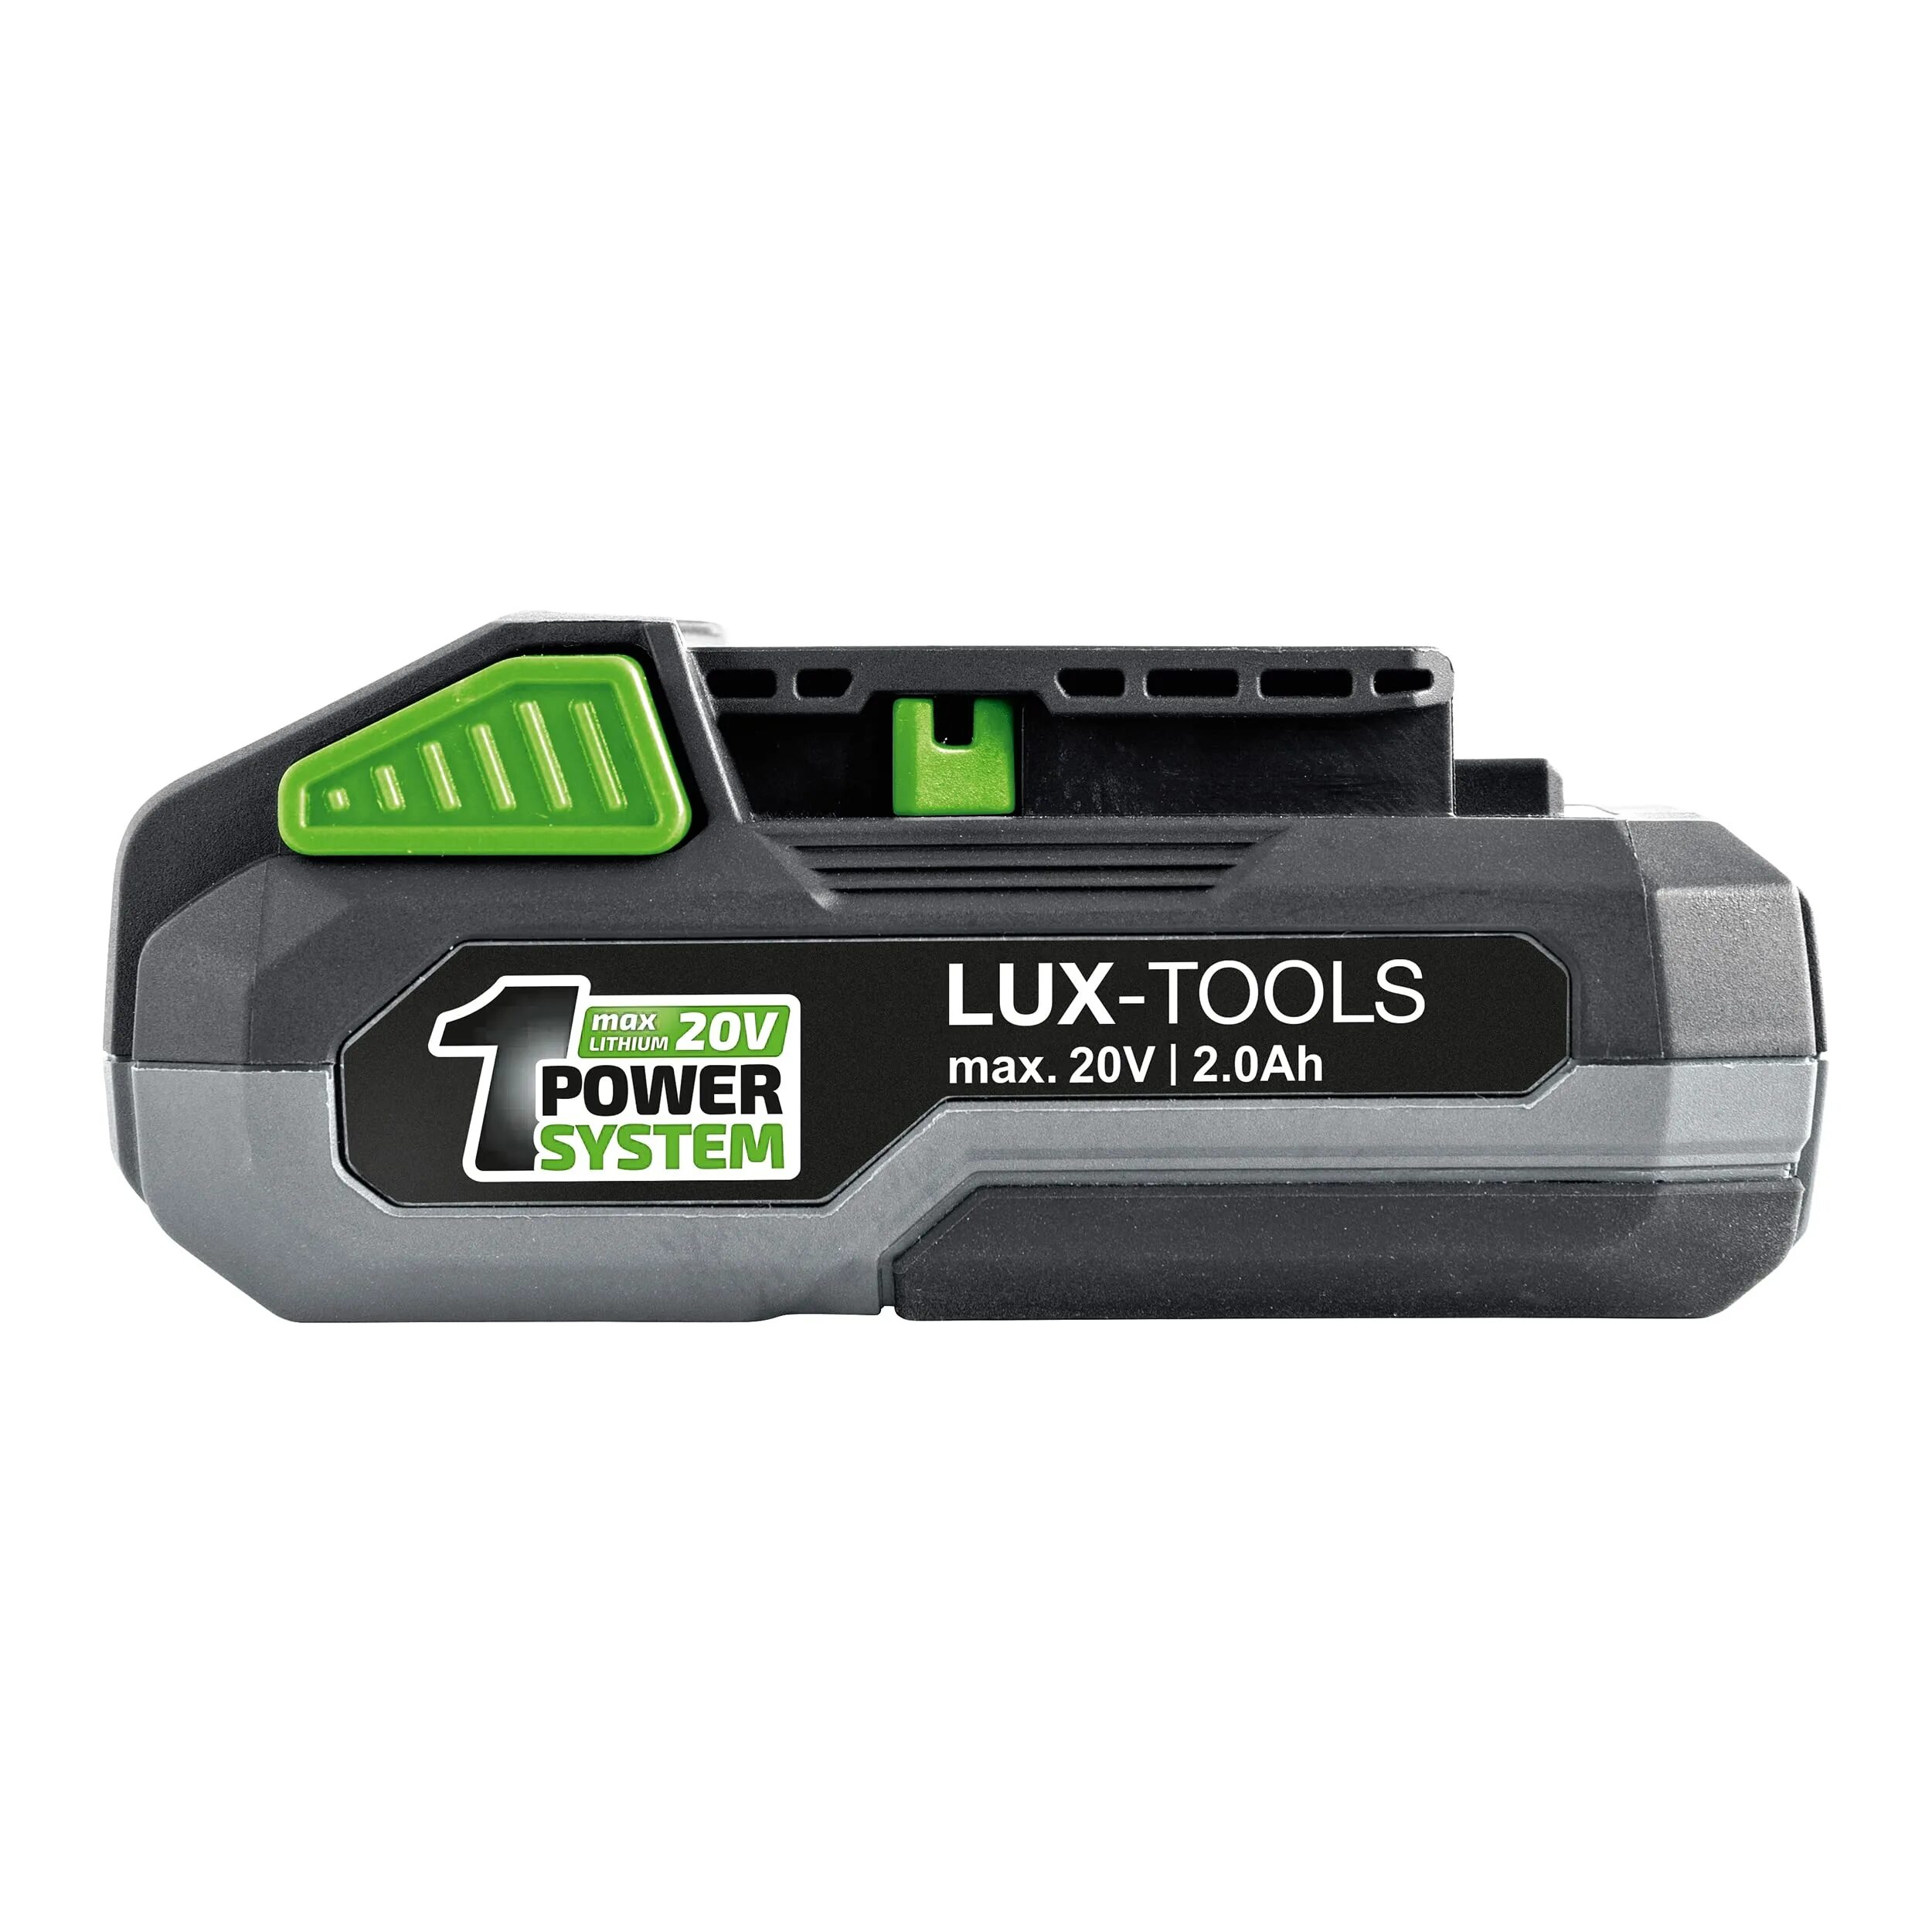 Battery tool. Аккумулятор Lux Tools 20v. Шуруповерт Lux Tools 20v аккумулятор. Аккумулятор Lux Tools 20v 2.0Ah. Аккумулятор Lux-Tools 20v Obi.